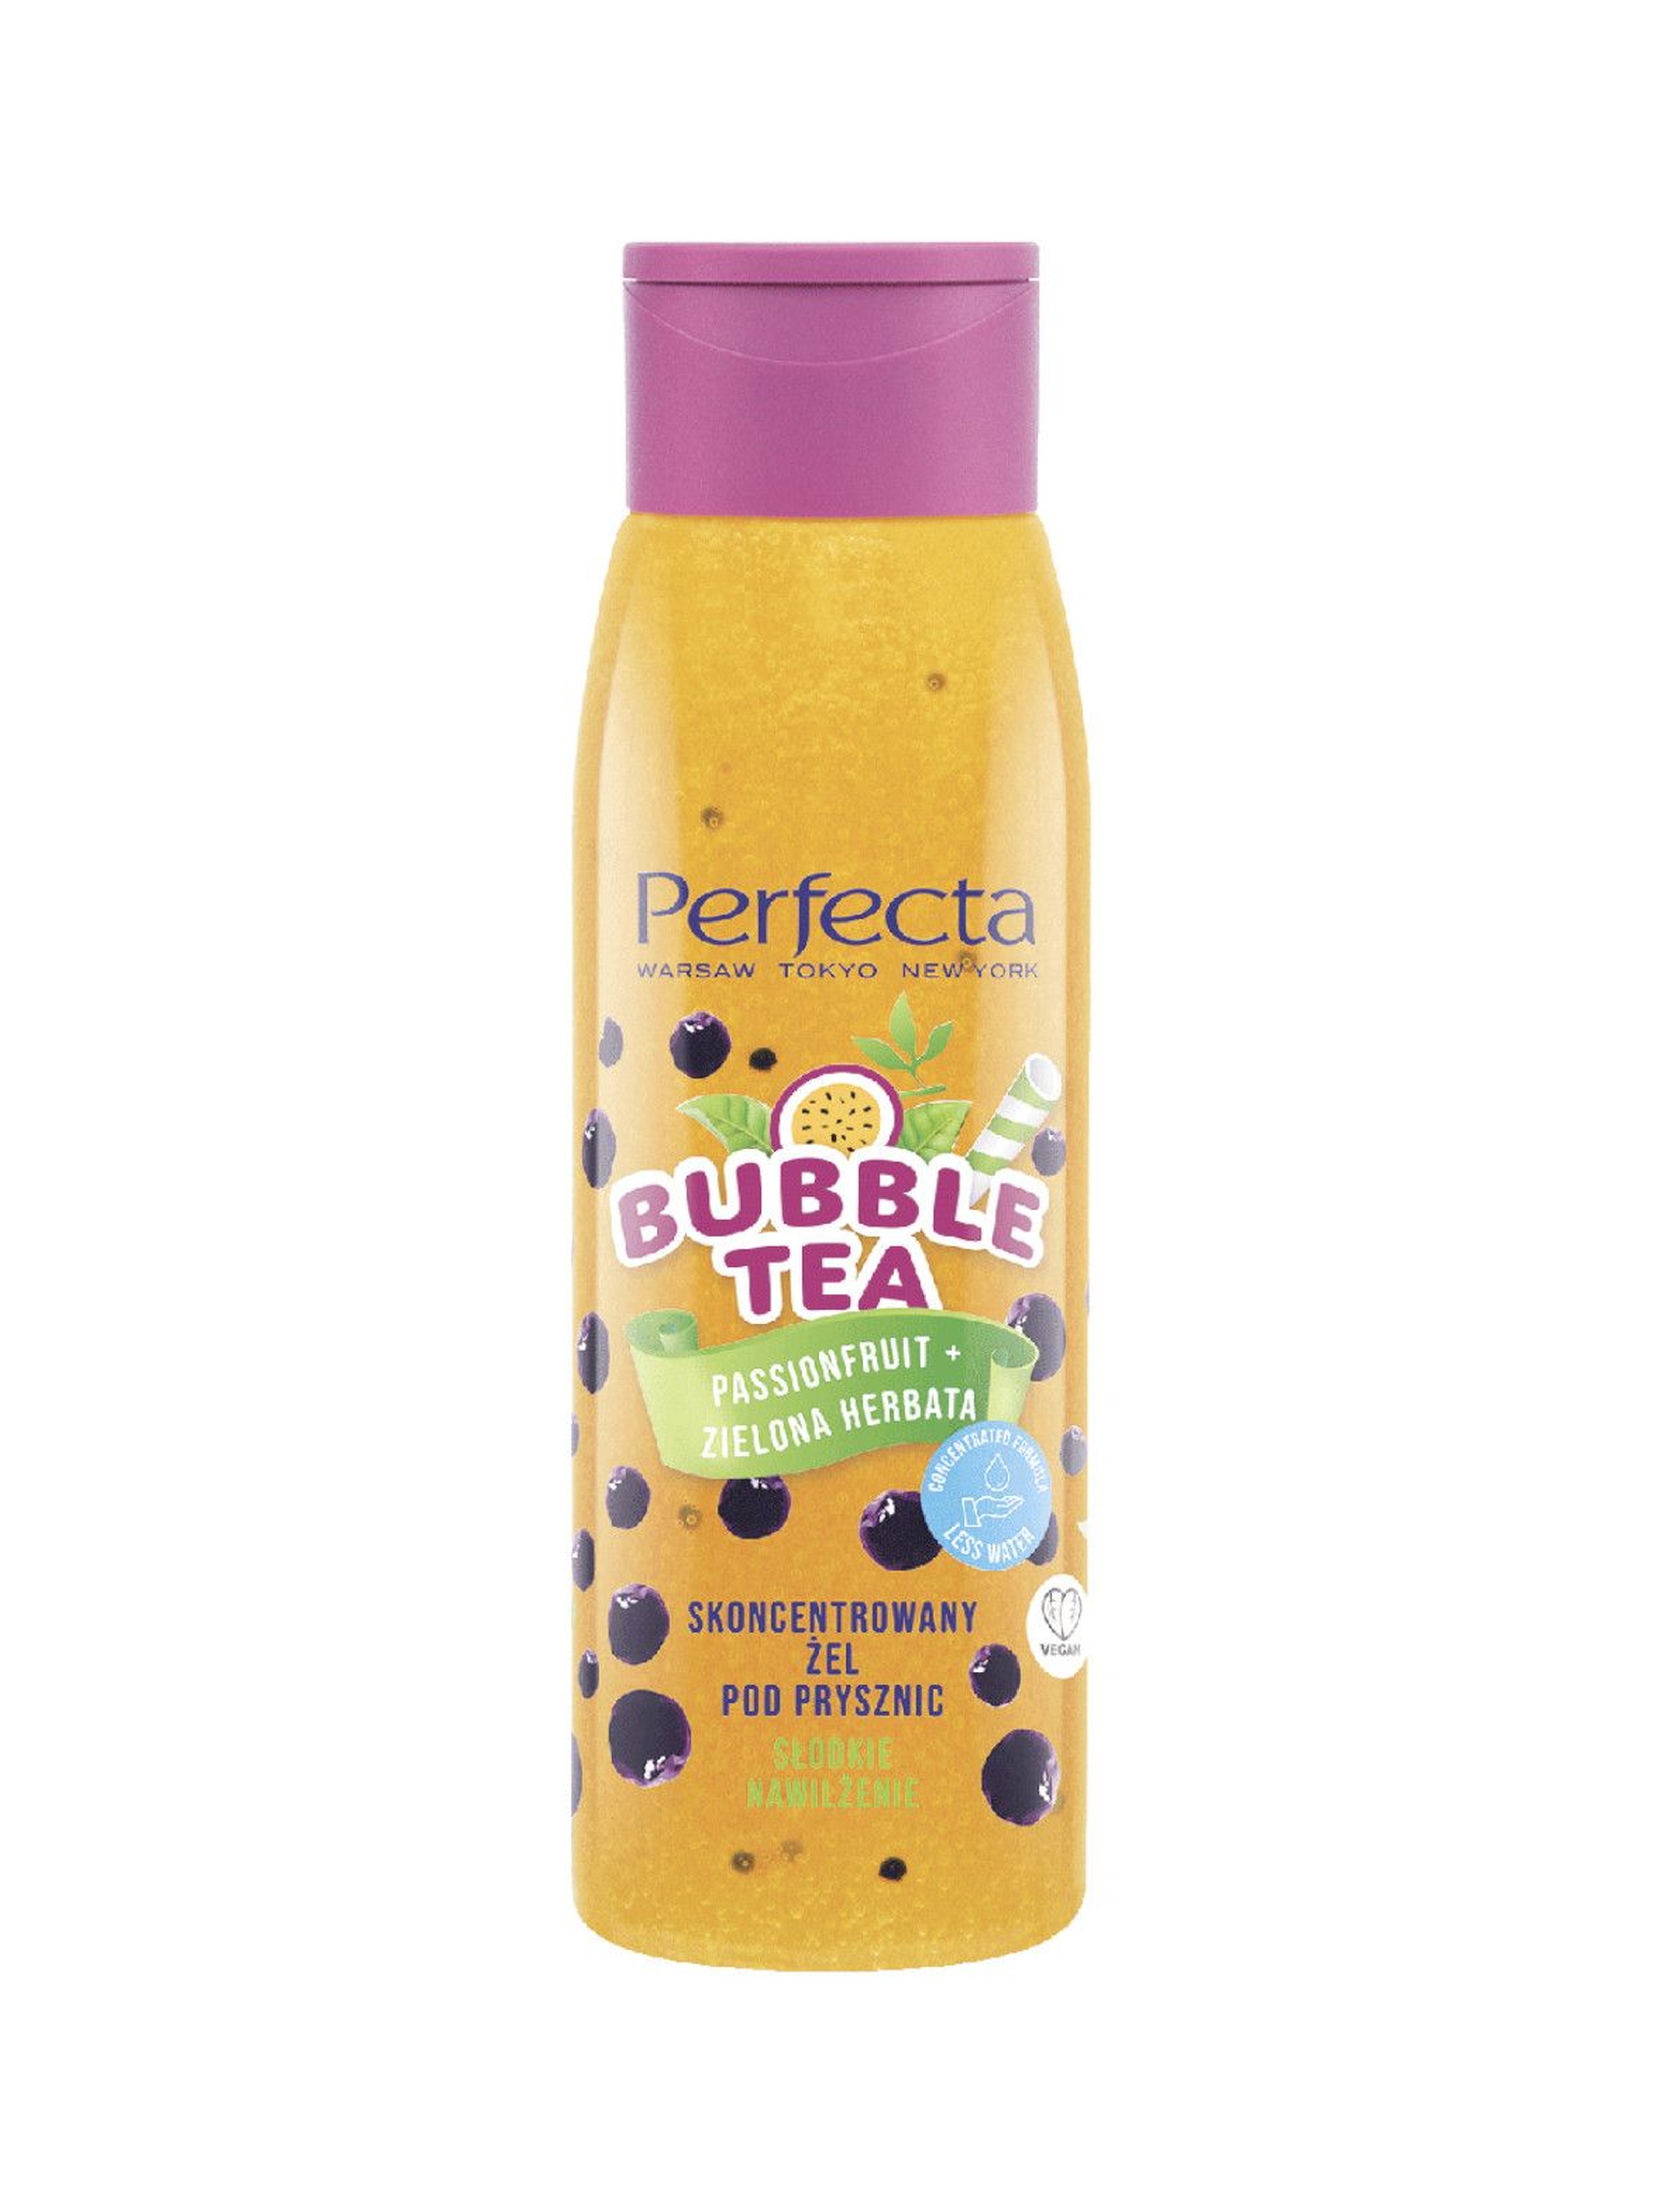 Perfecta Bubble Tea, skoncentrowany żel pod prysznic, Passionfruit + Zielona Herbata, 400 ml